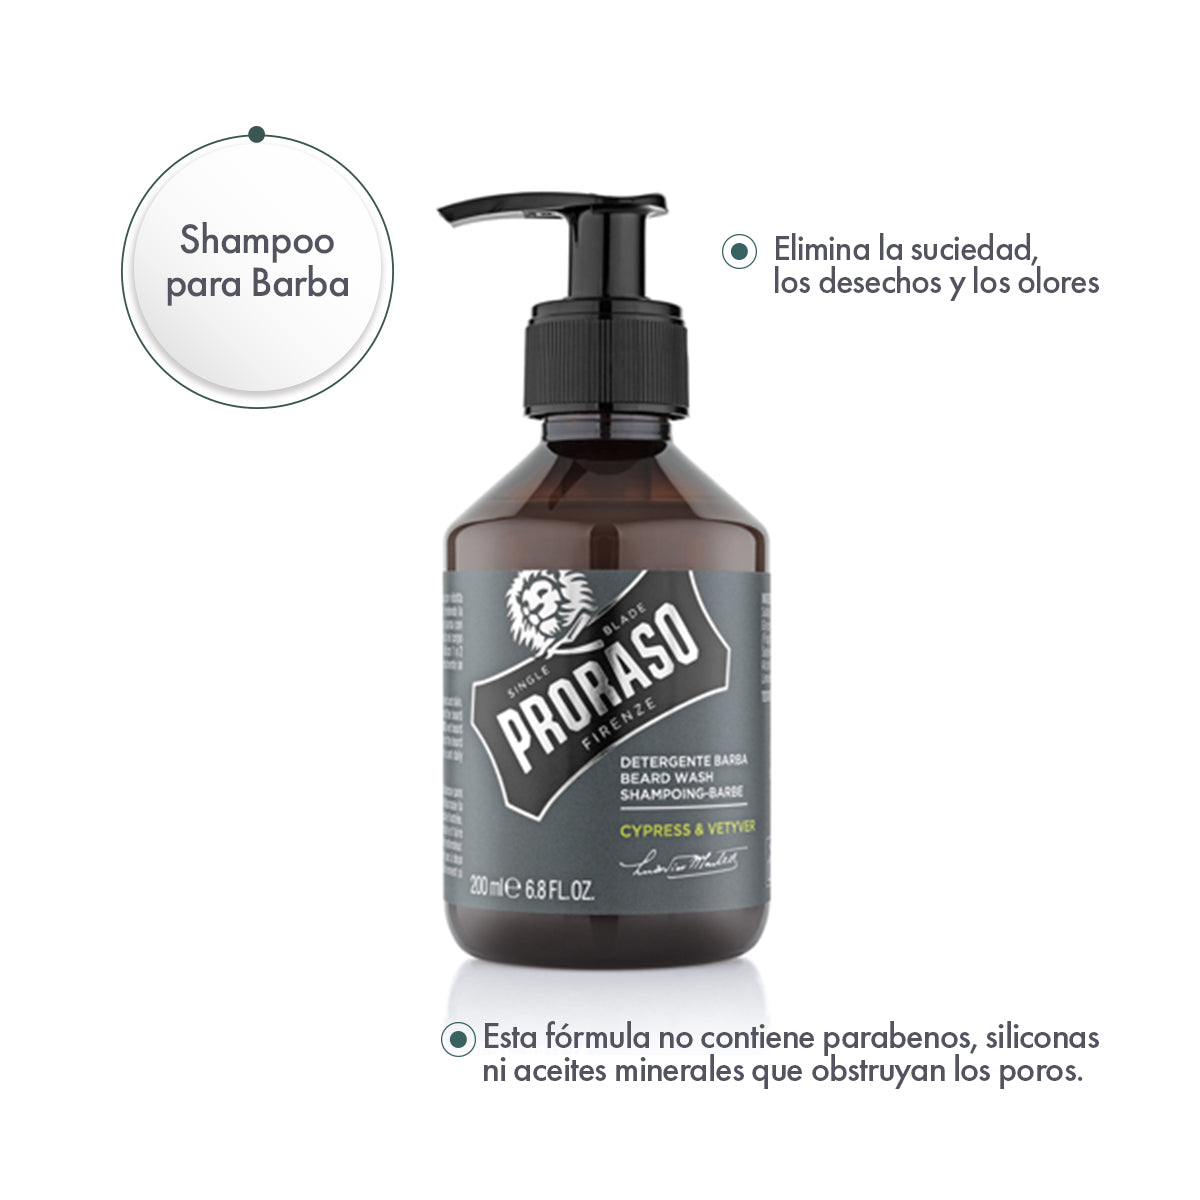 Shampoo para Barba Cypress & Vetiver 6 Piezas - ttaiomayoreo